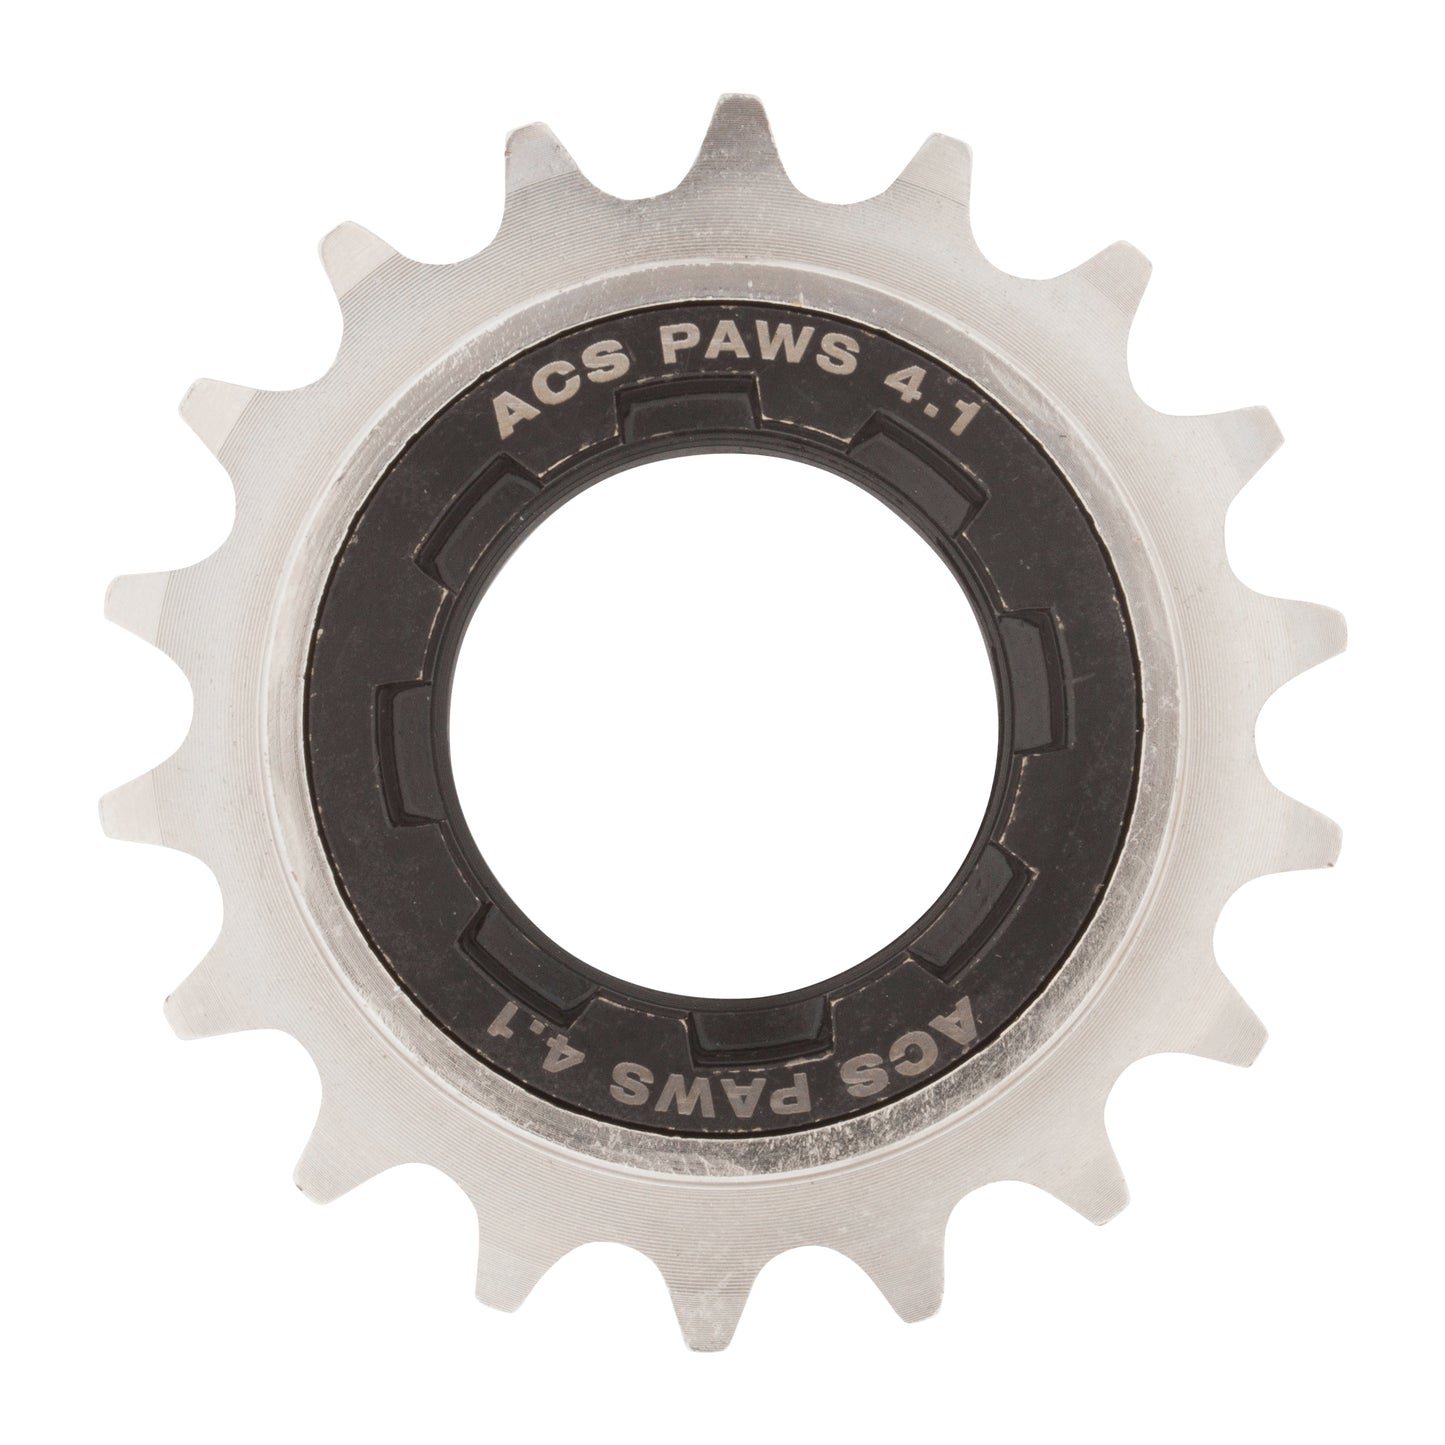 ACS Paws 4.1 Single Speed Freewheels